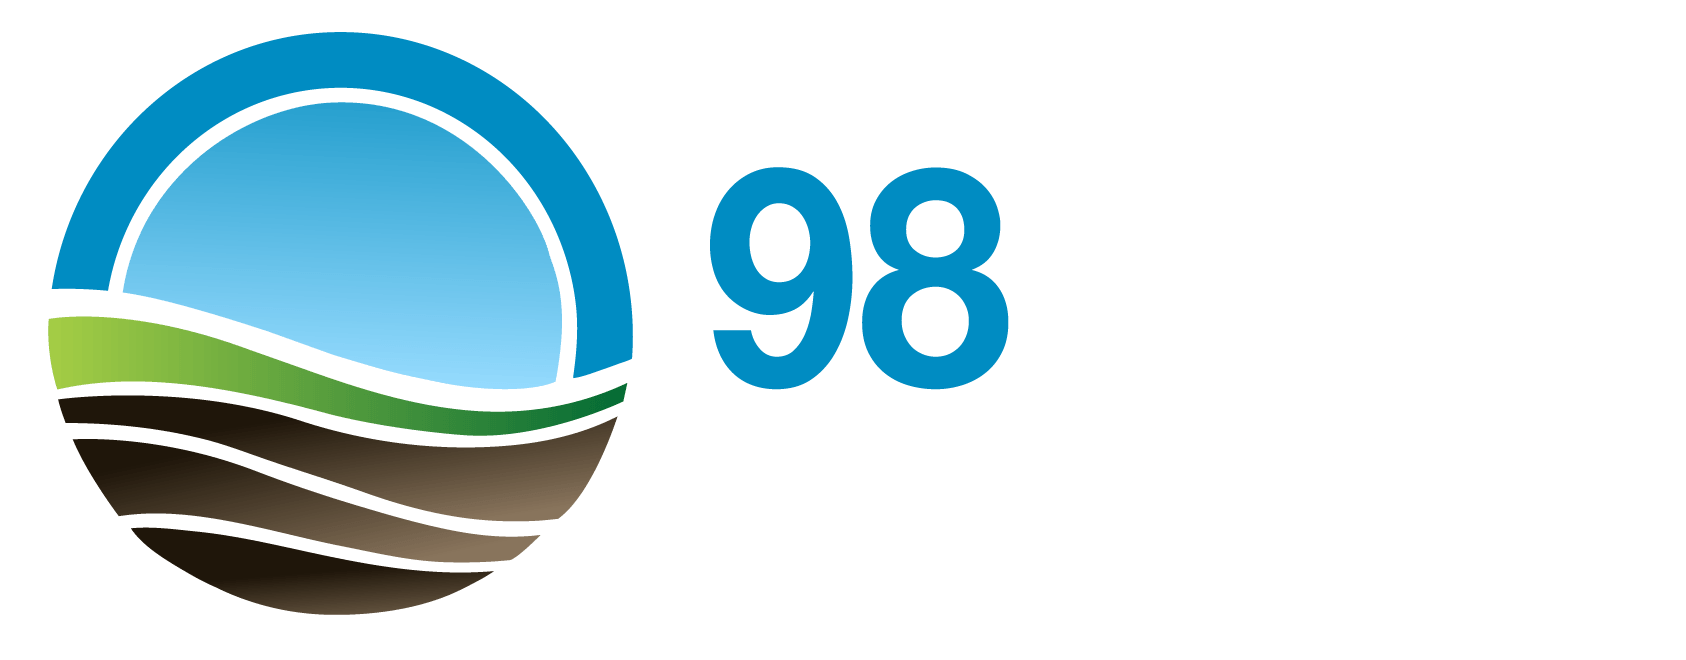 98 Logo - Atlanta Inbound Content Marketing Agency - 98toGo